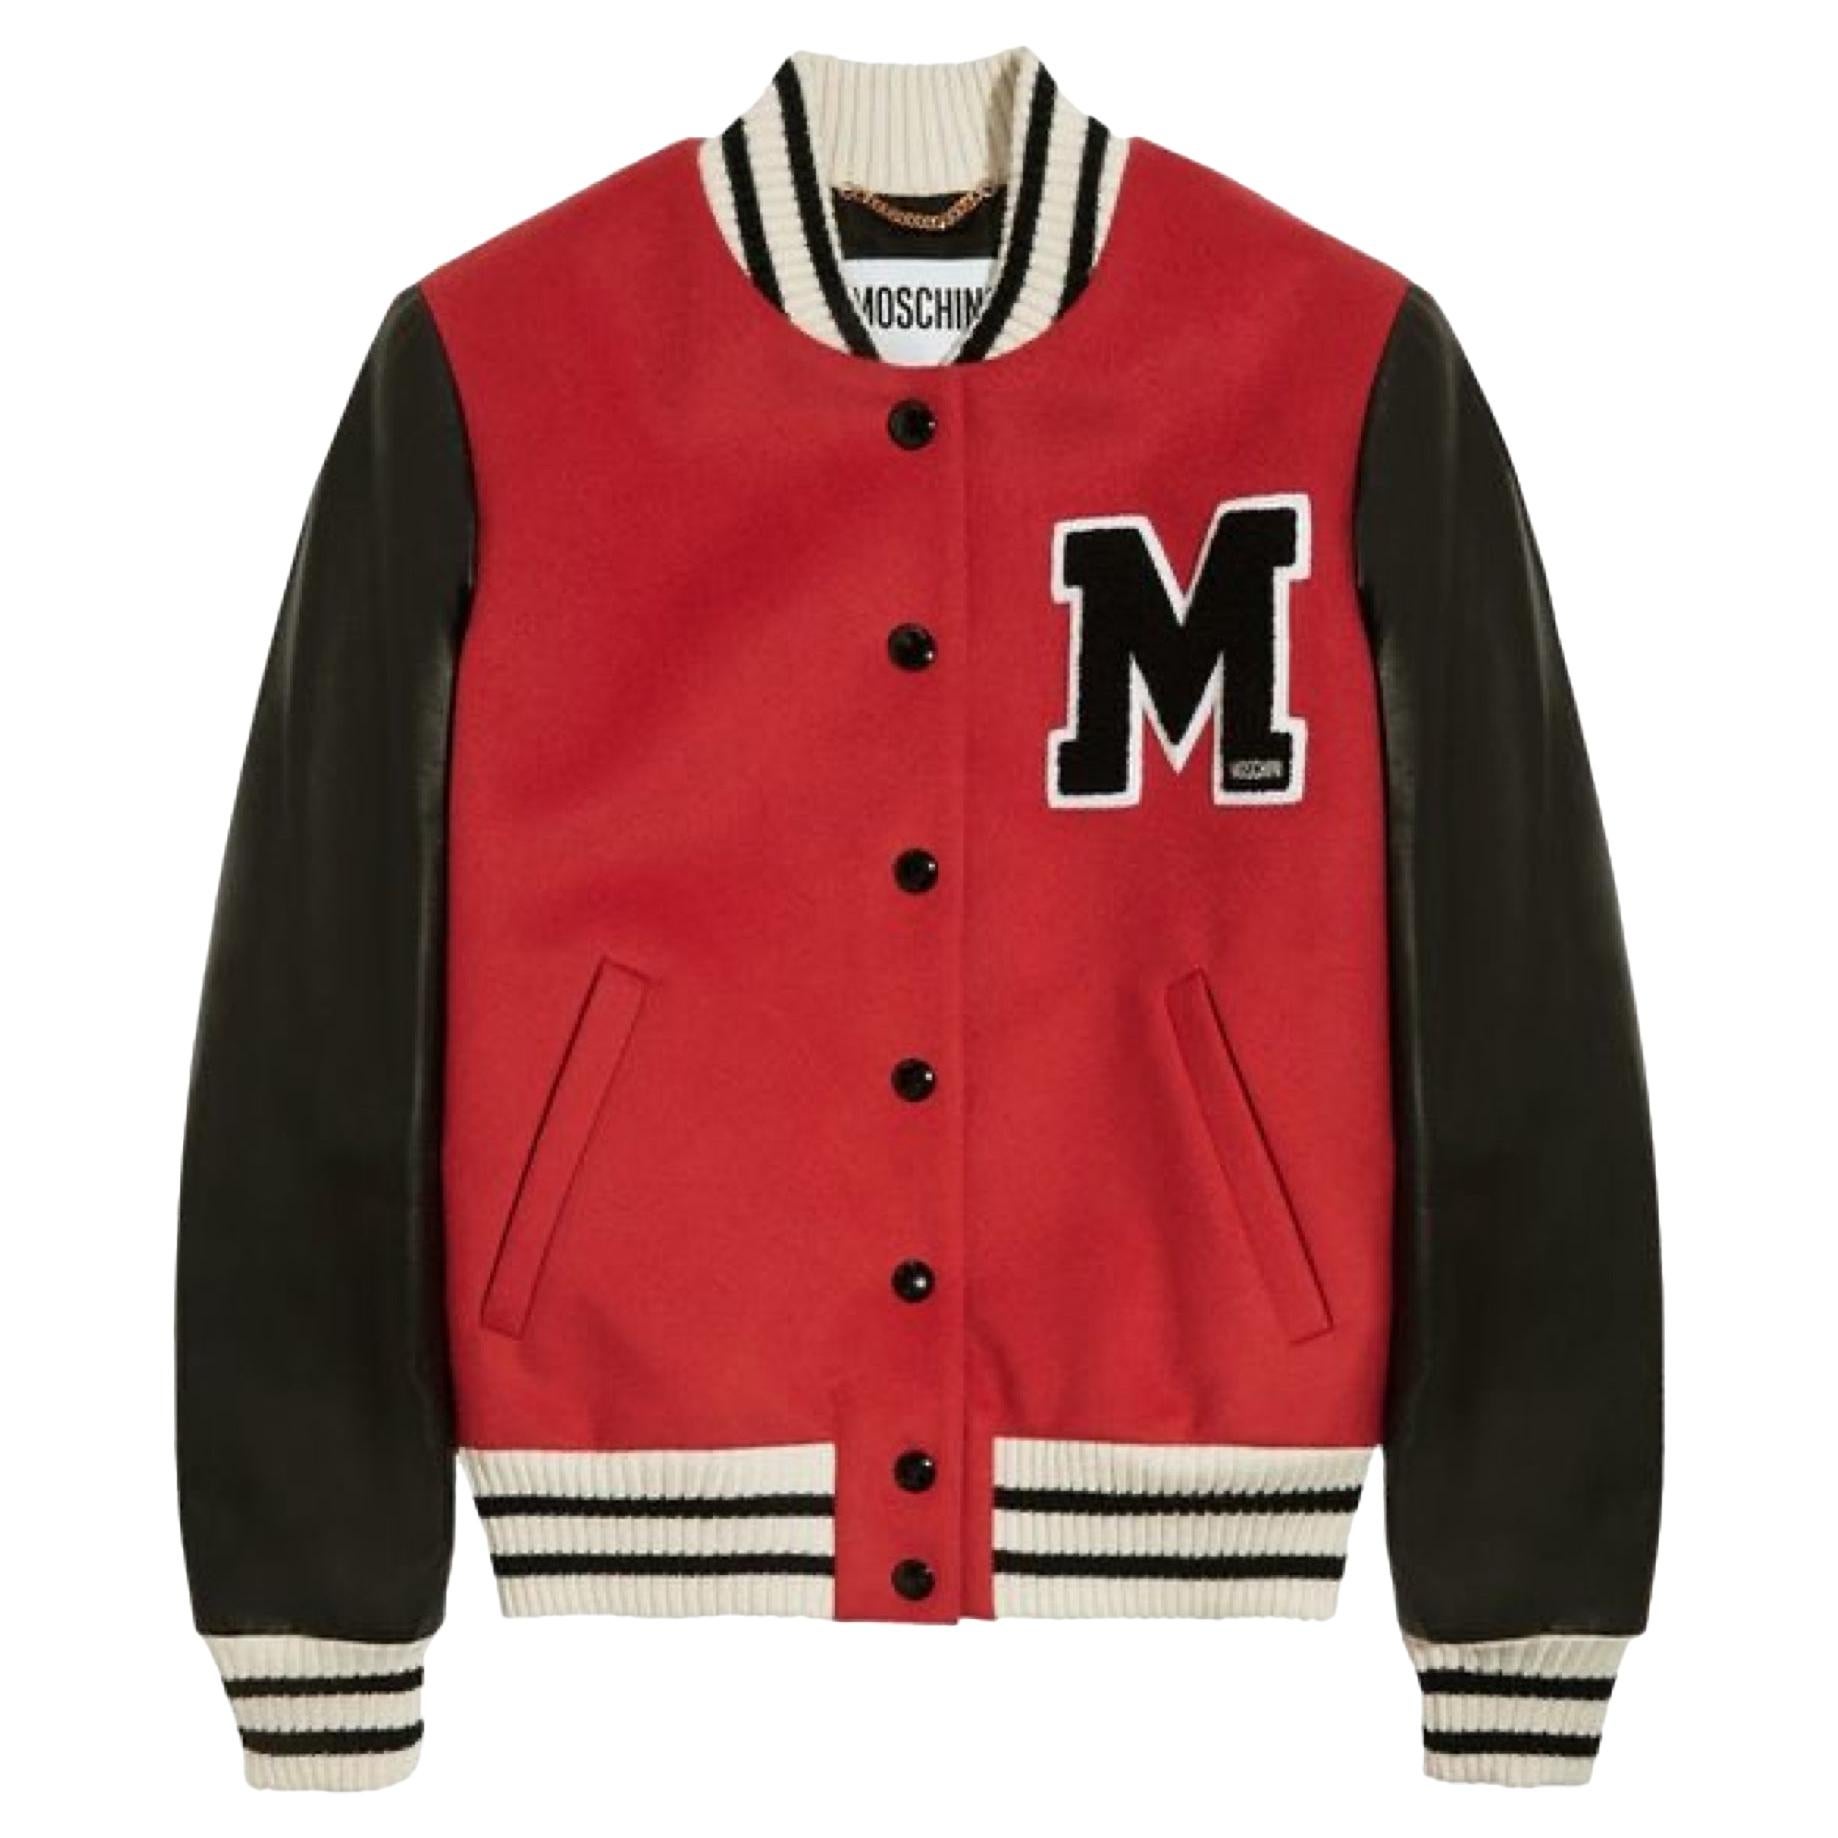 Moschino Jeremy Scott Couture Leather Varsity Jacket (Medium) For Sale ...